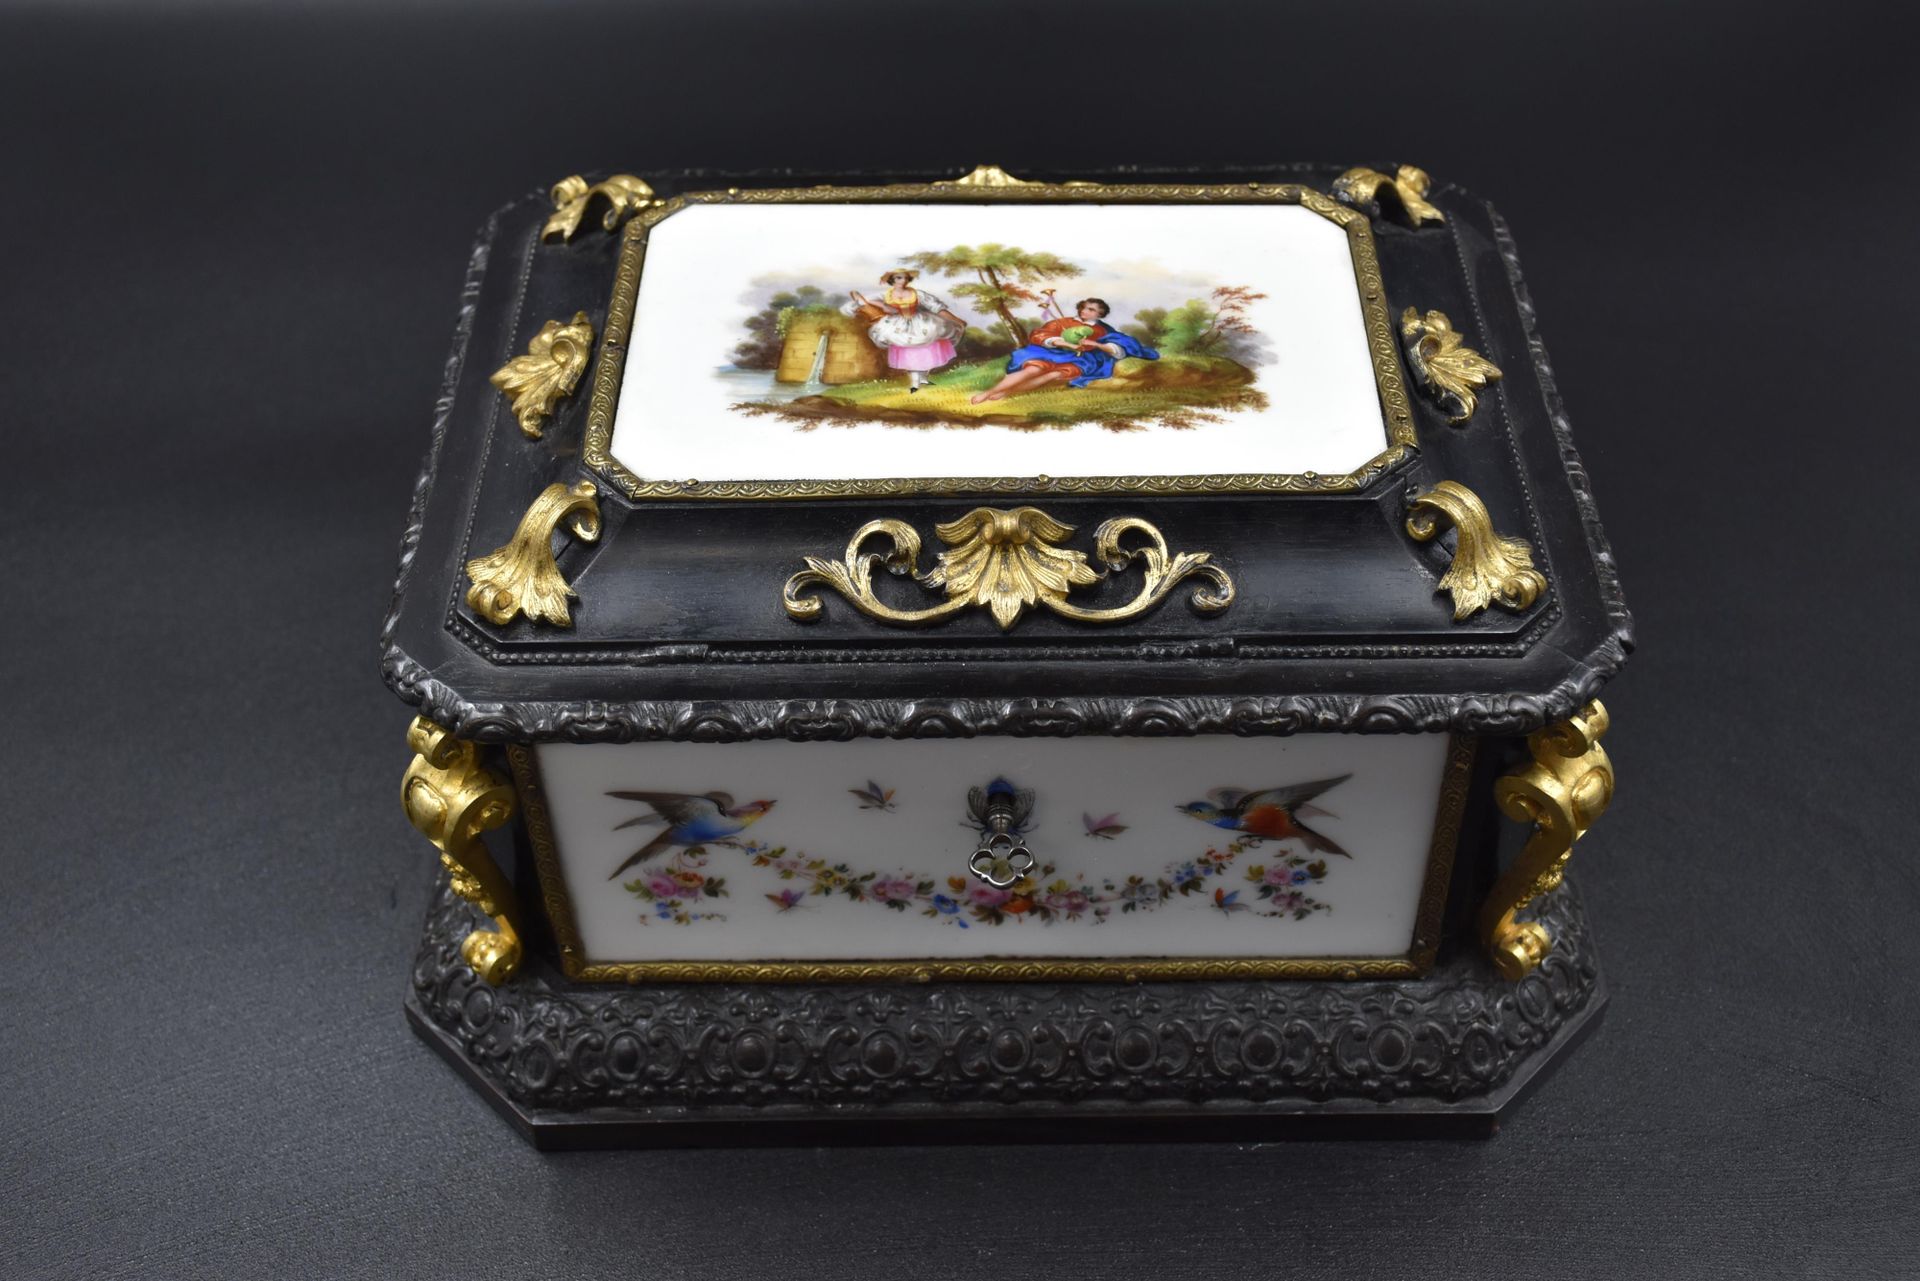 Null 拿破仑三世时期的盒子，瓷盘上有丰富的浪漫和乡村场景的装饰。船闸入口处装饰着一只苍蝇。镀金青铜器的装饰品。高度：14厘米 长度：26厘米。